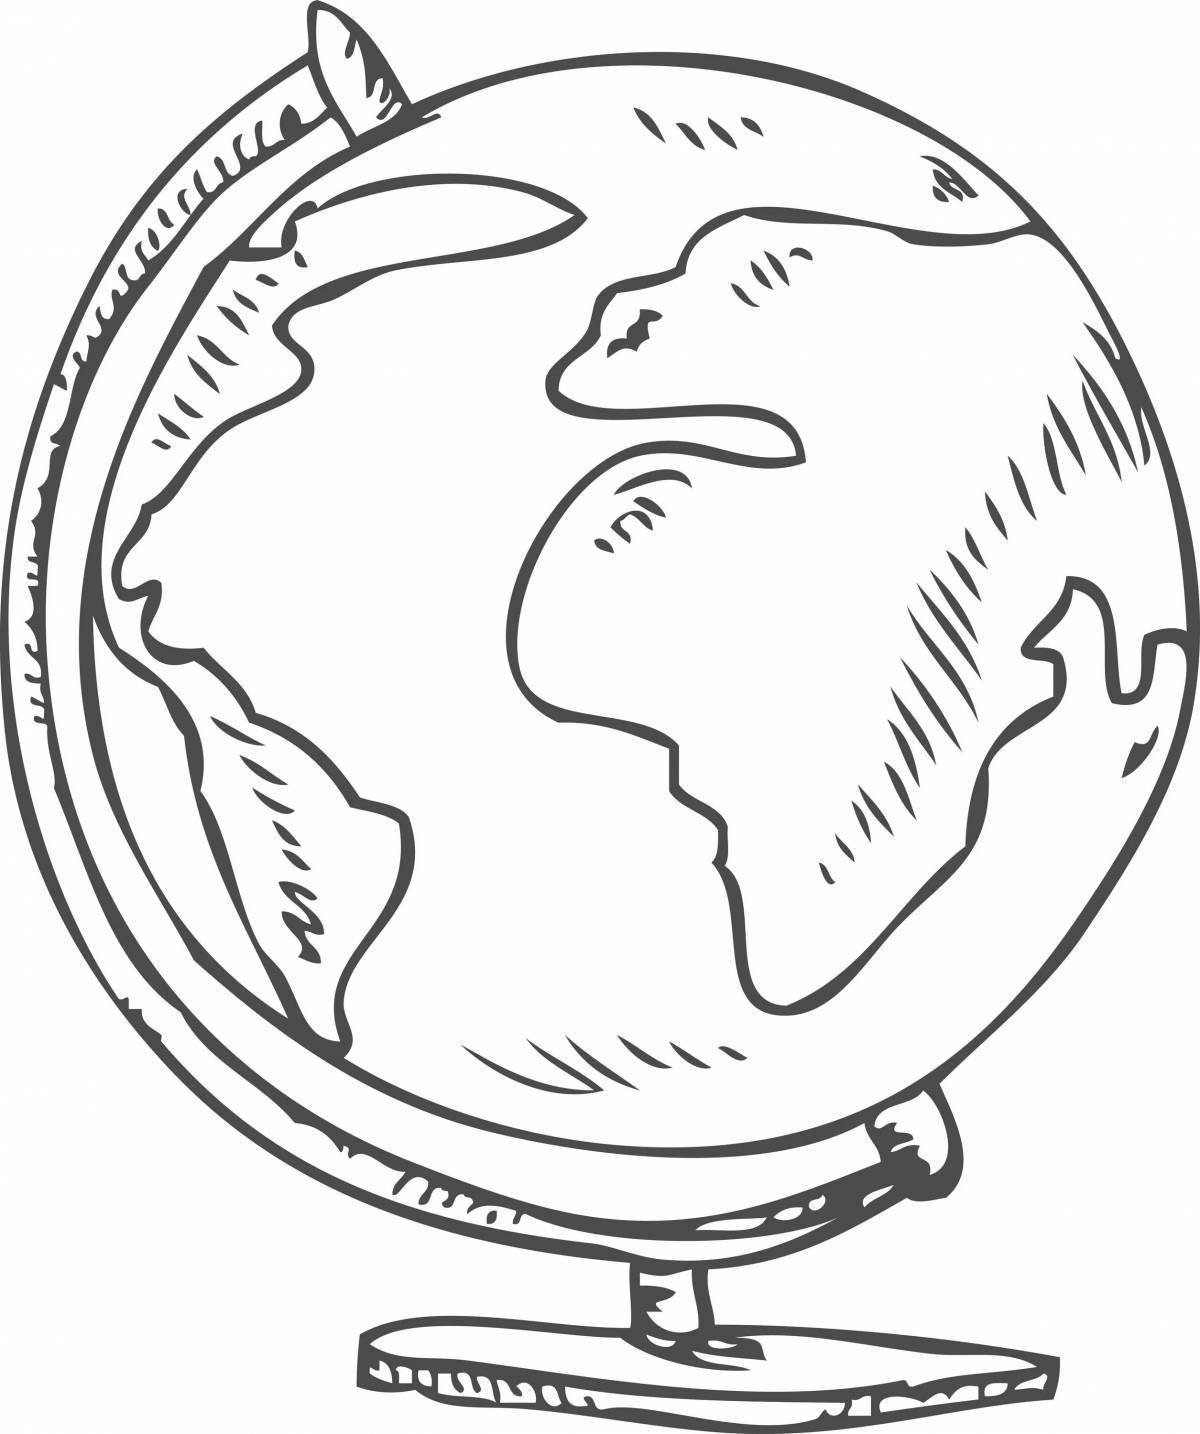 Children's globe drawing for #11